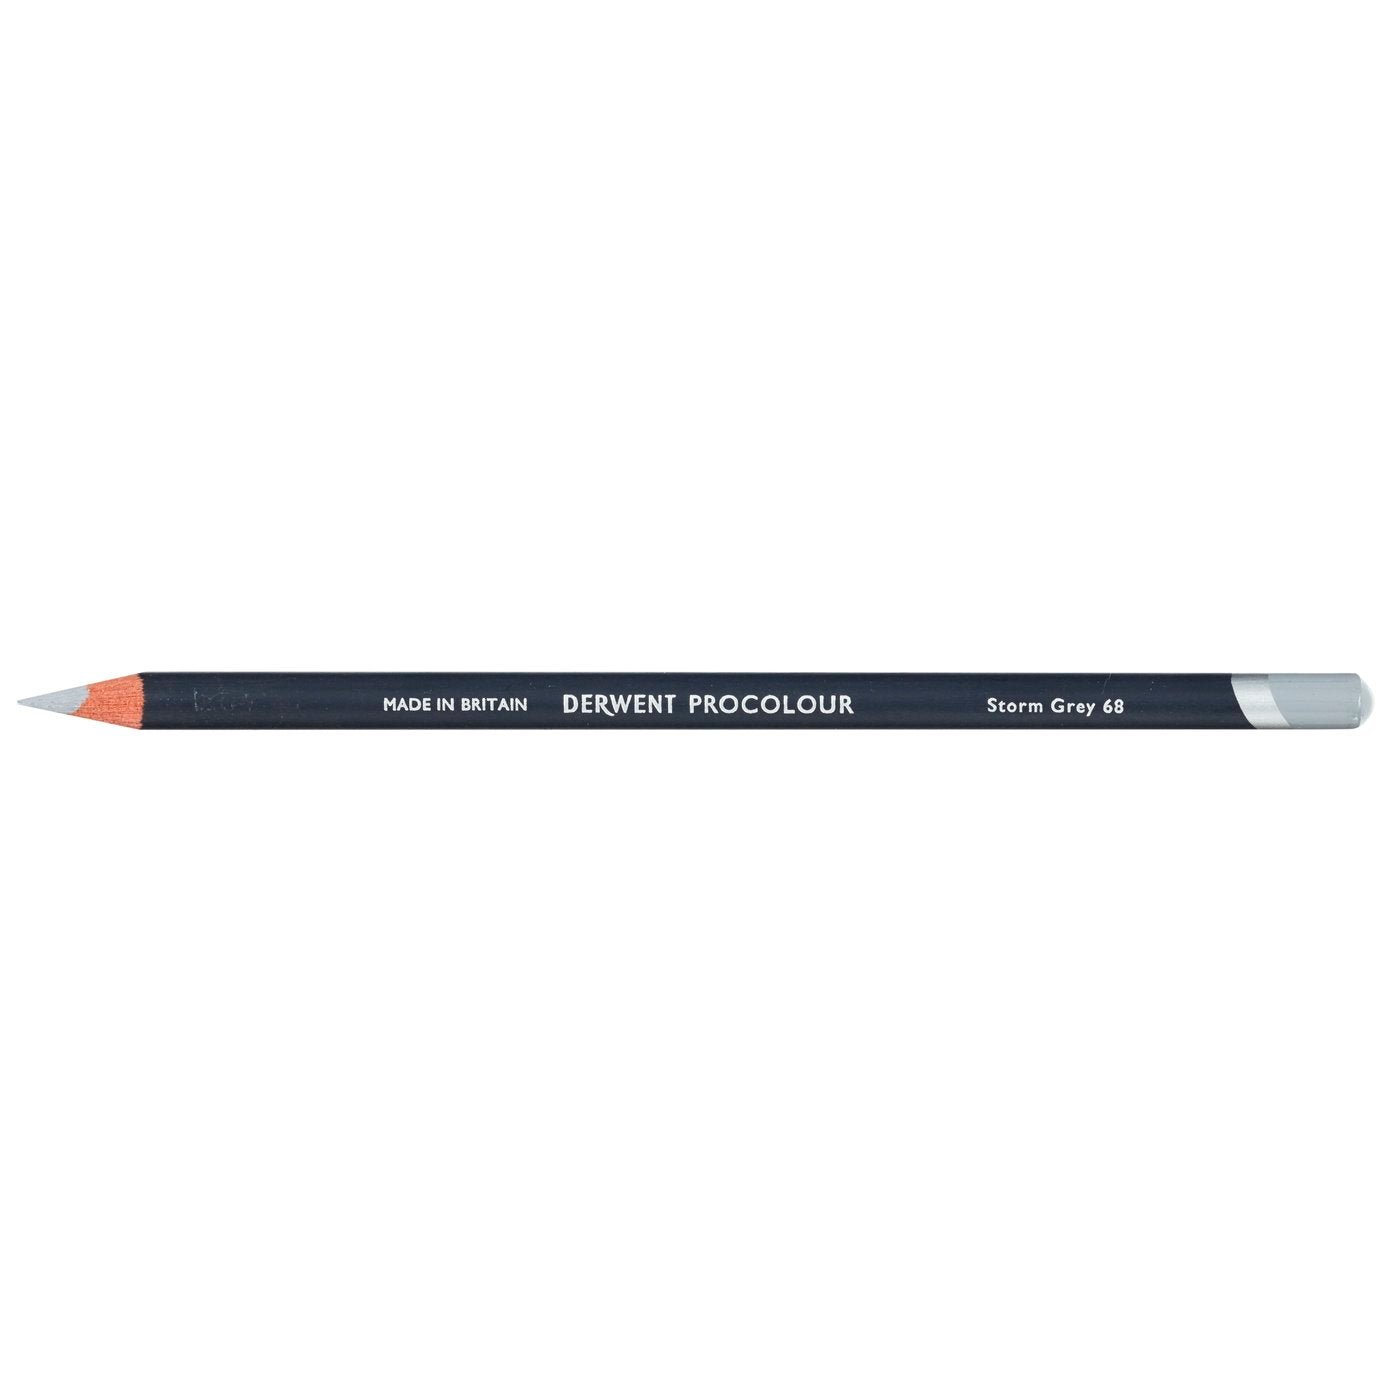 Derwent Procolour Pencil Storm Grey 68 - theartshop.com.au